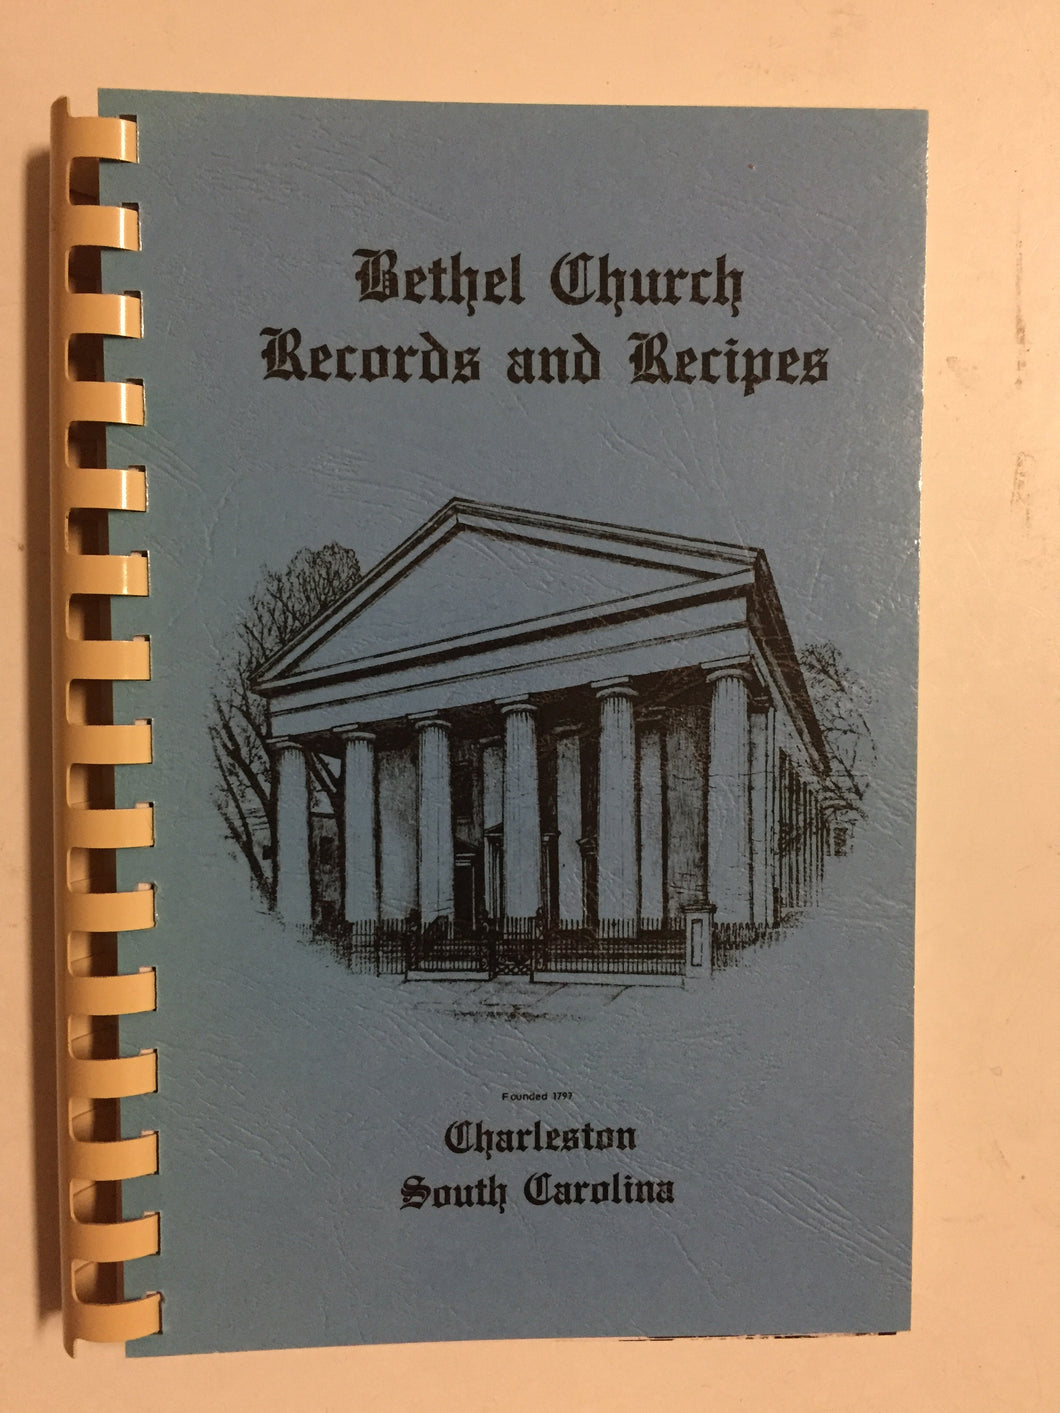 Bethel Church Records and Recipes - Slick Cat Books 